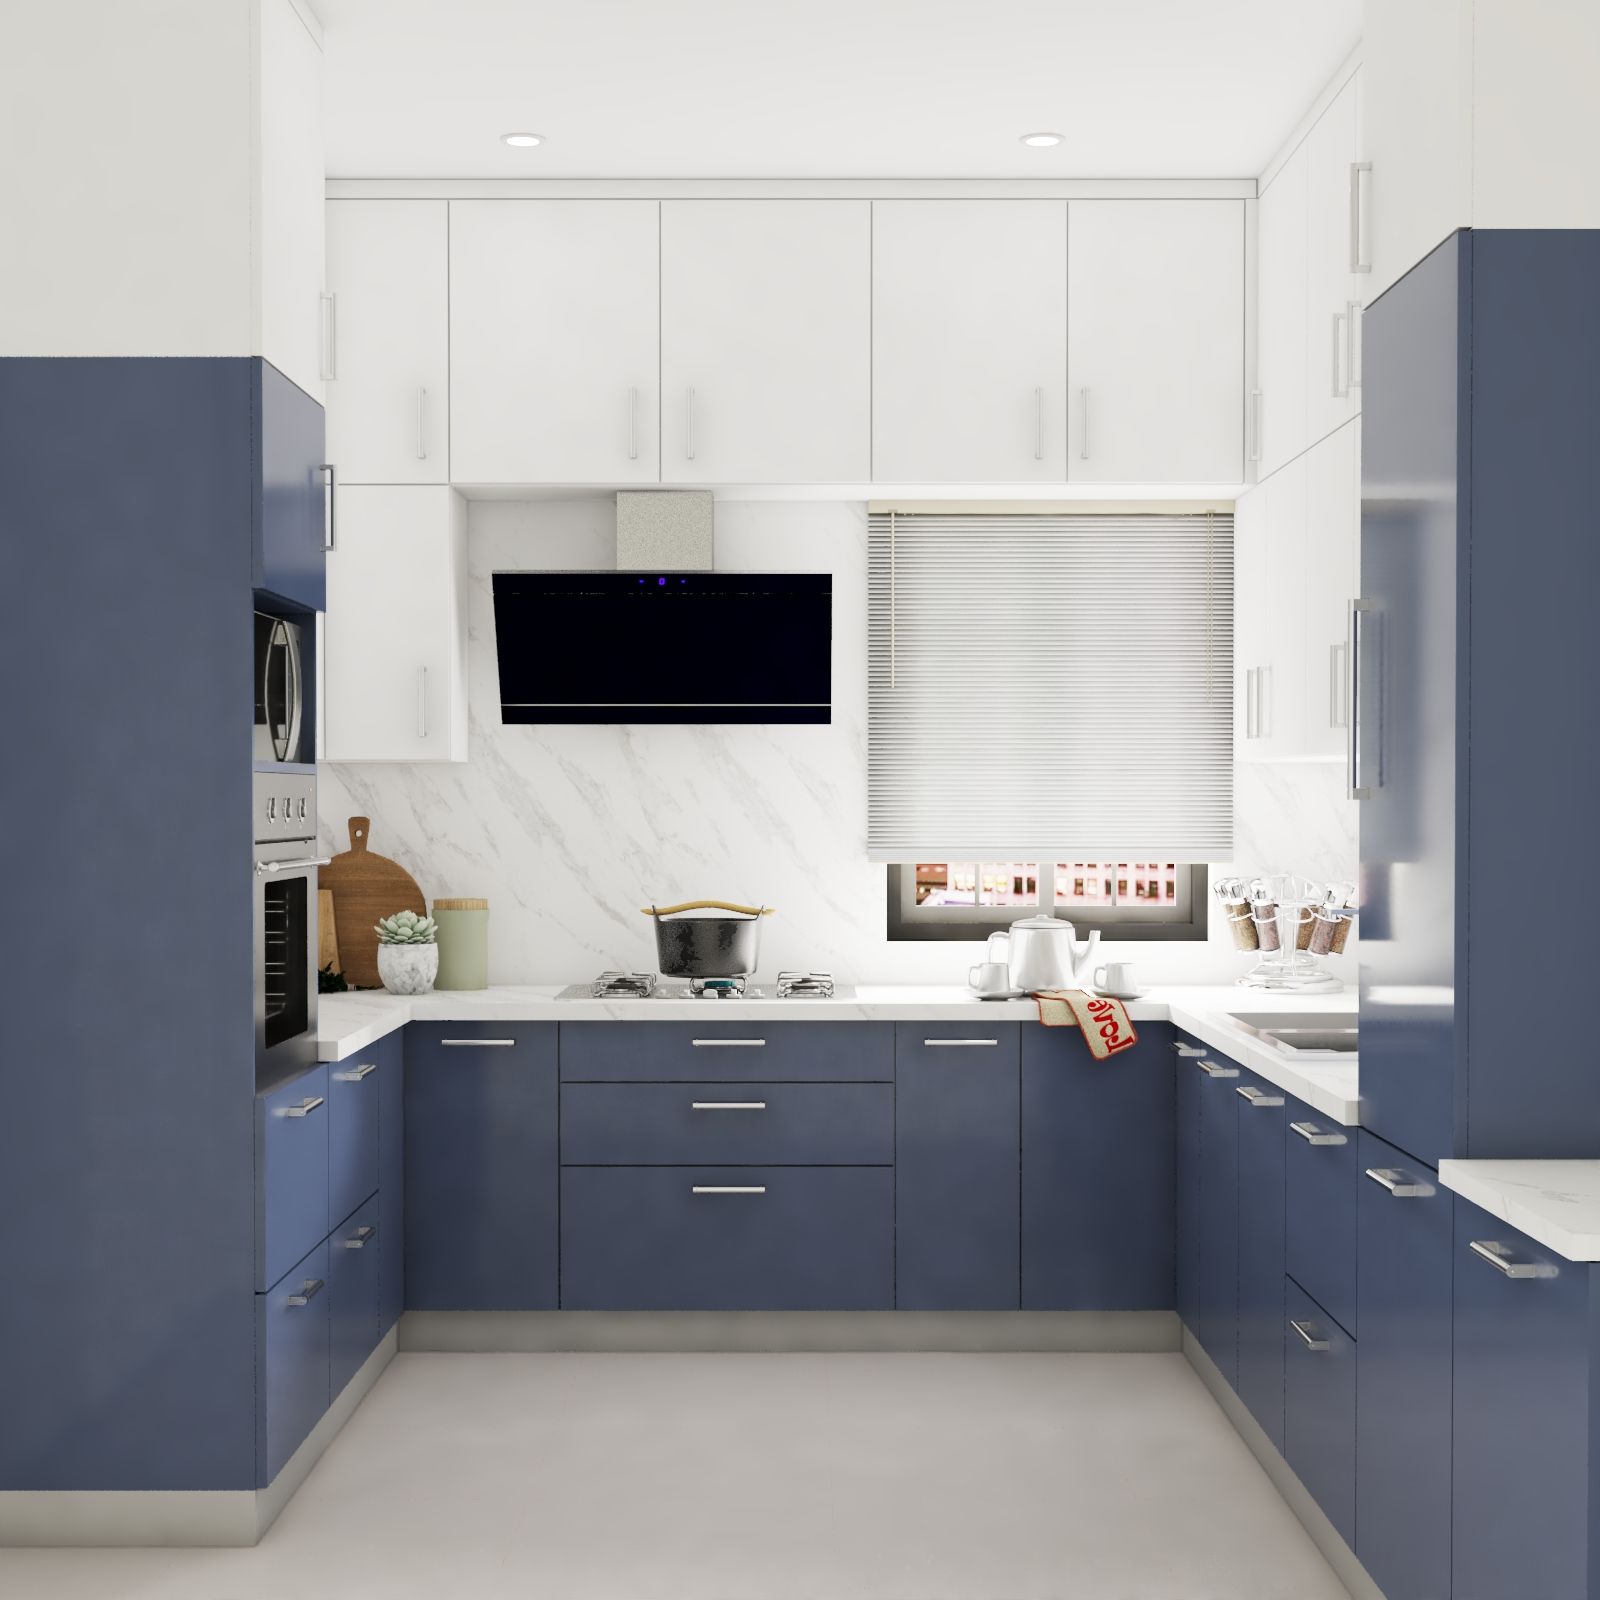 Modern U-Shaped Kitchen Design In Blue And White